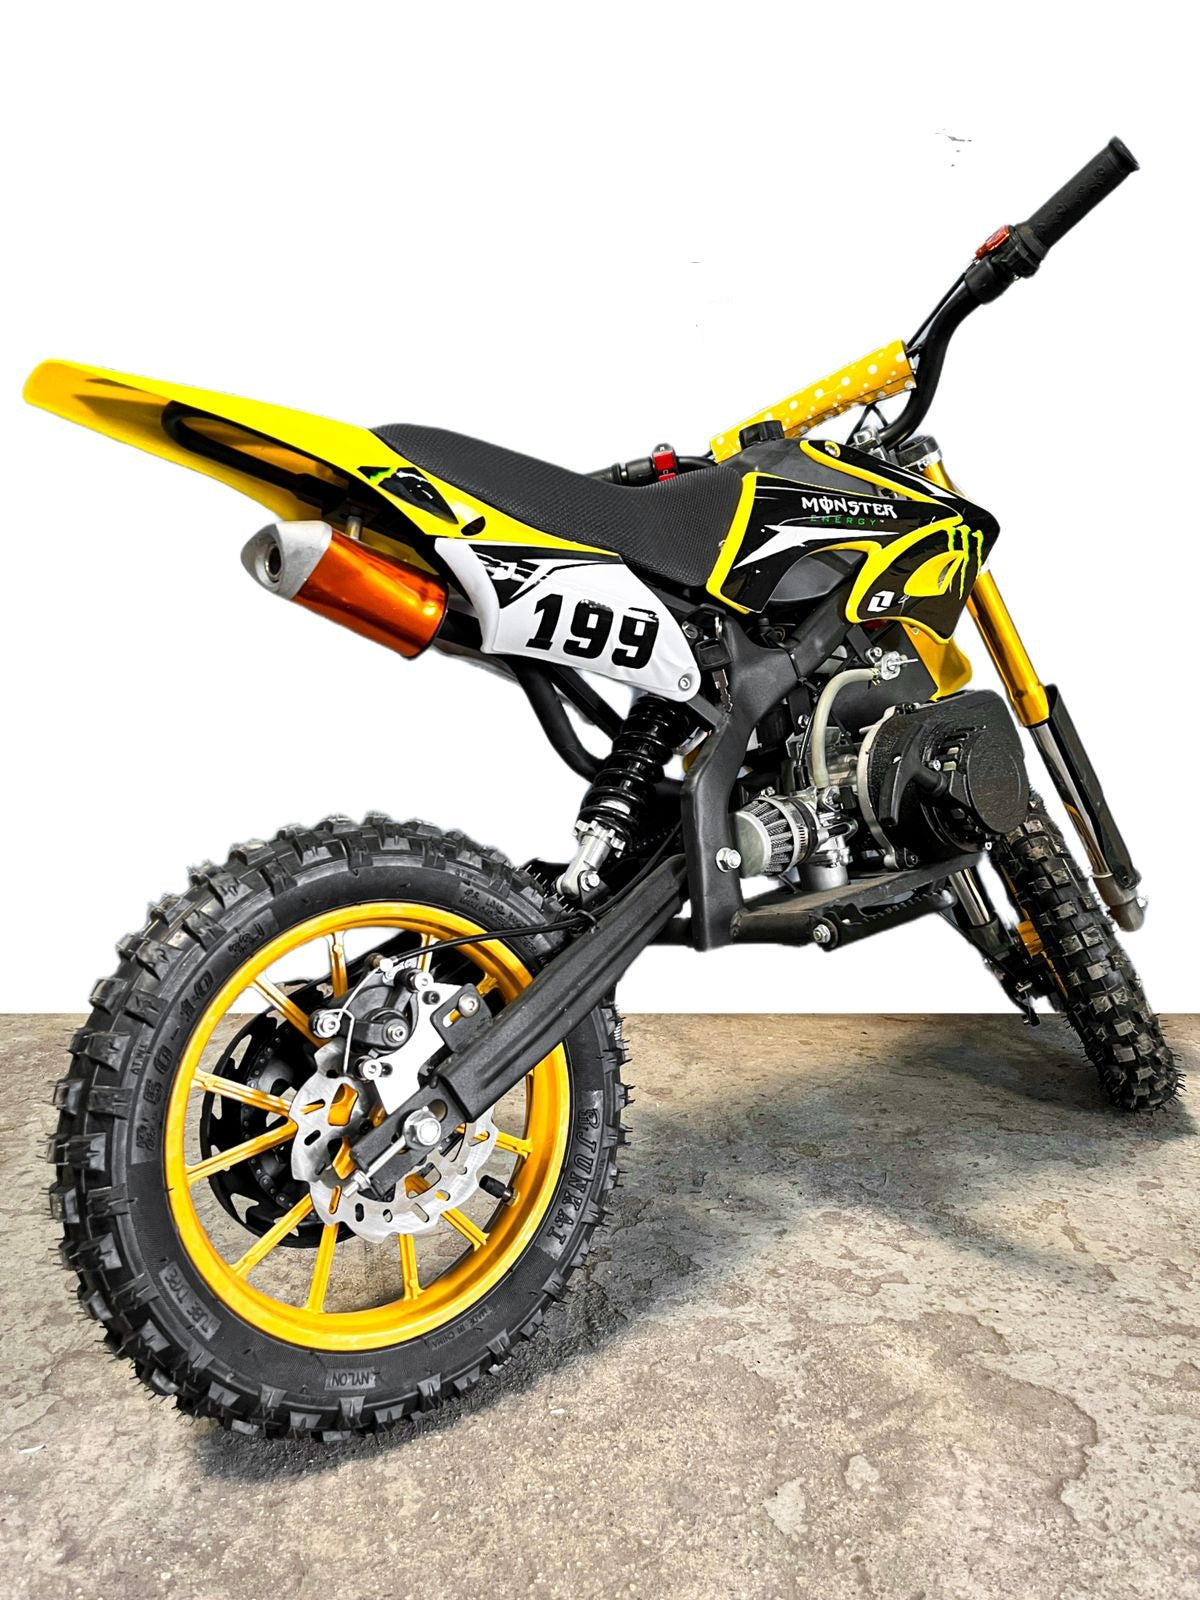 50cc 2 Stroke Super-Cross Kids Dirt Bike - Best Mini Off-Road Motorcycle for Childrens (Yellow)